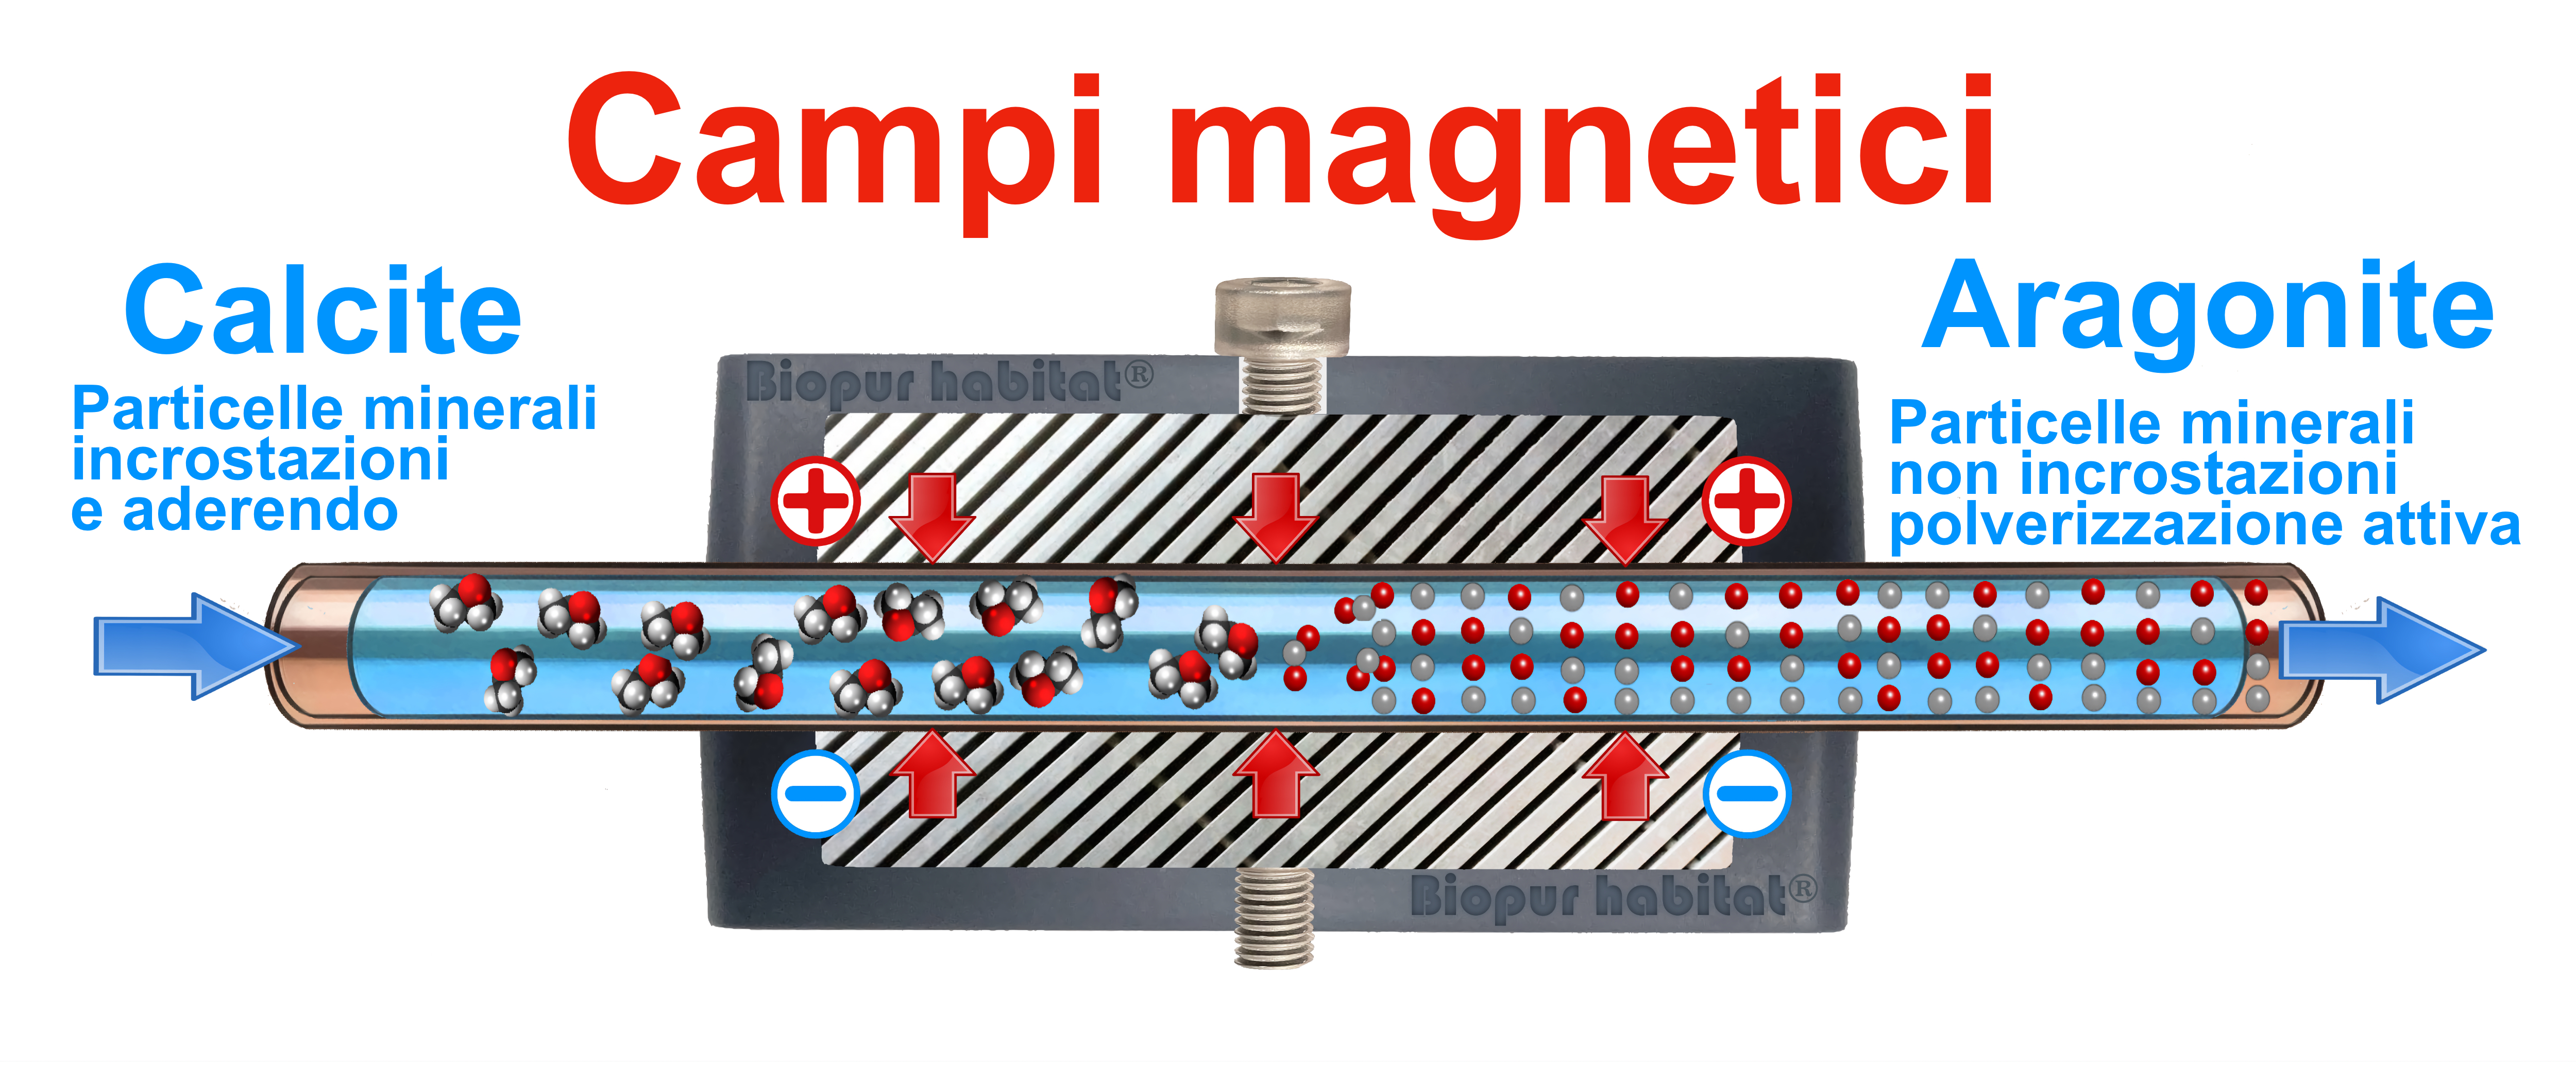 Magnete anticalcare magnetico powermag So Power 6200 gauss